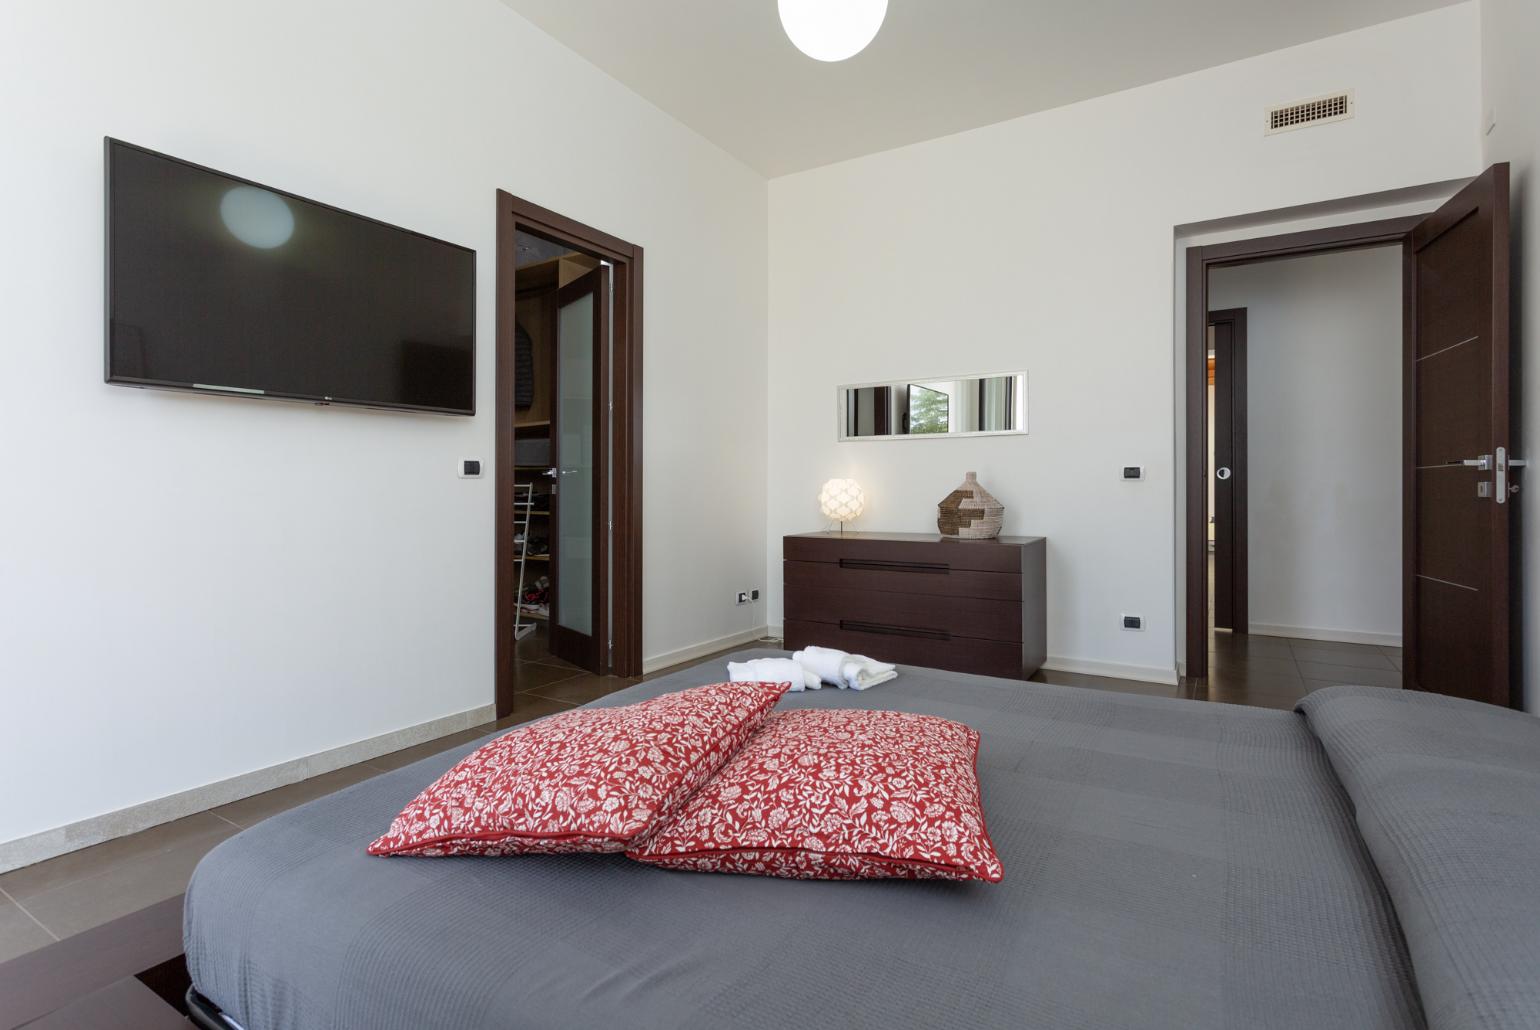 Double bedroom with en suite bathroom, A/C, TV, walk-in wardrobe, and terrace access